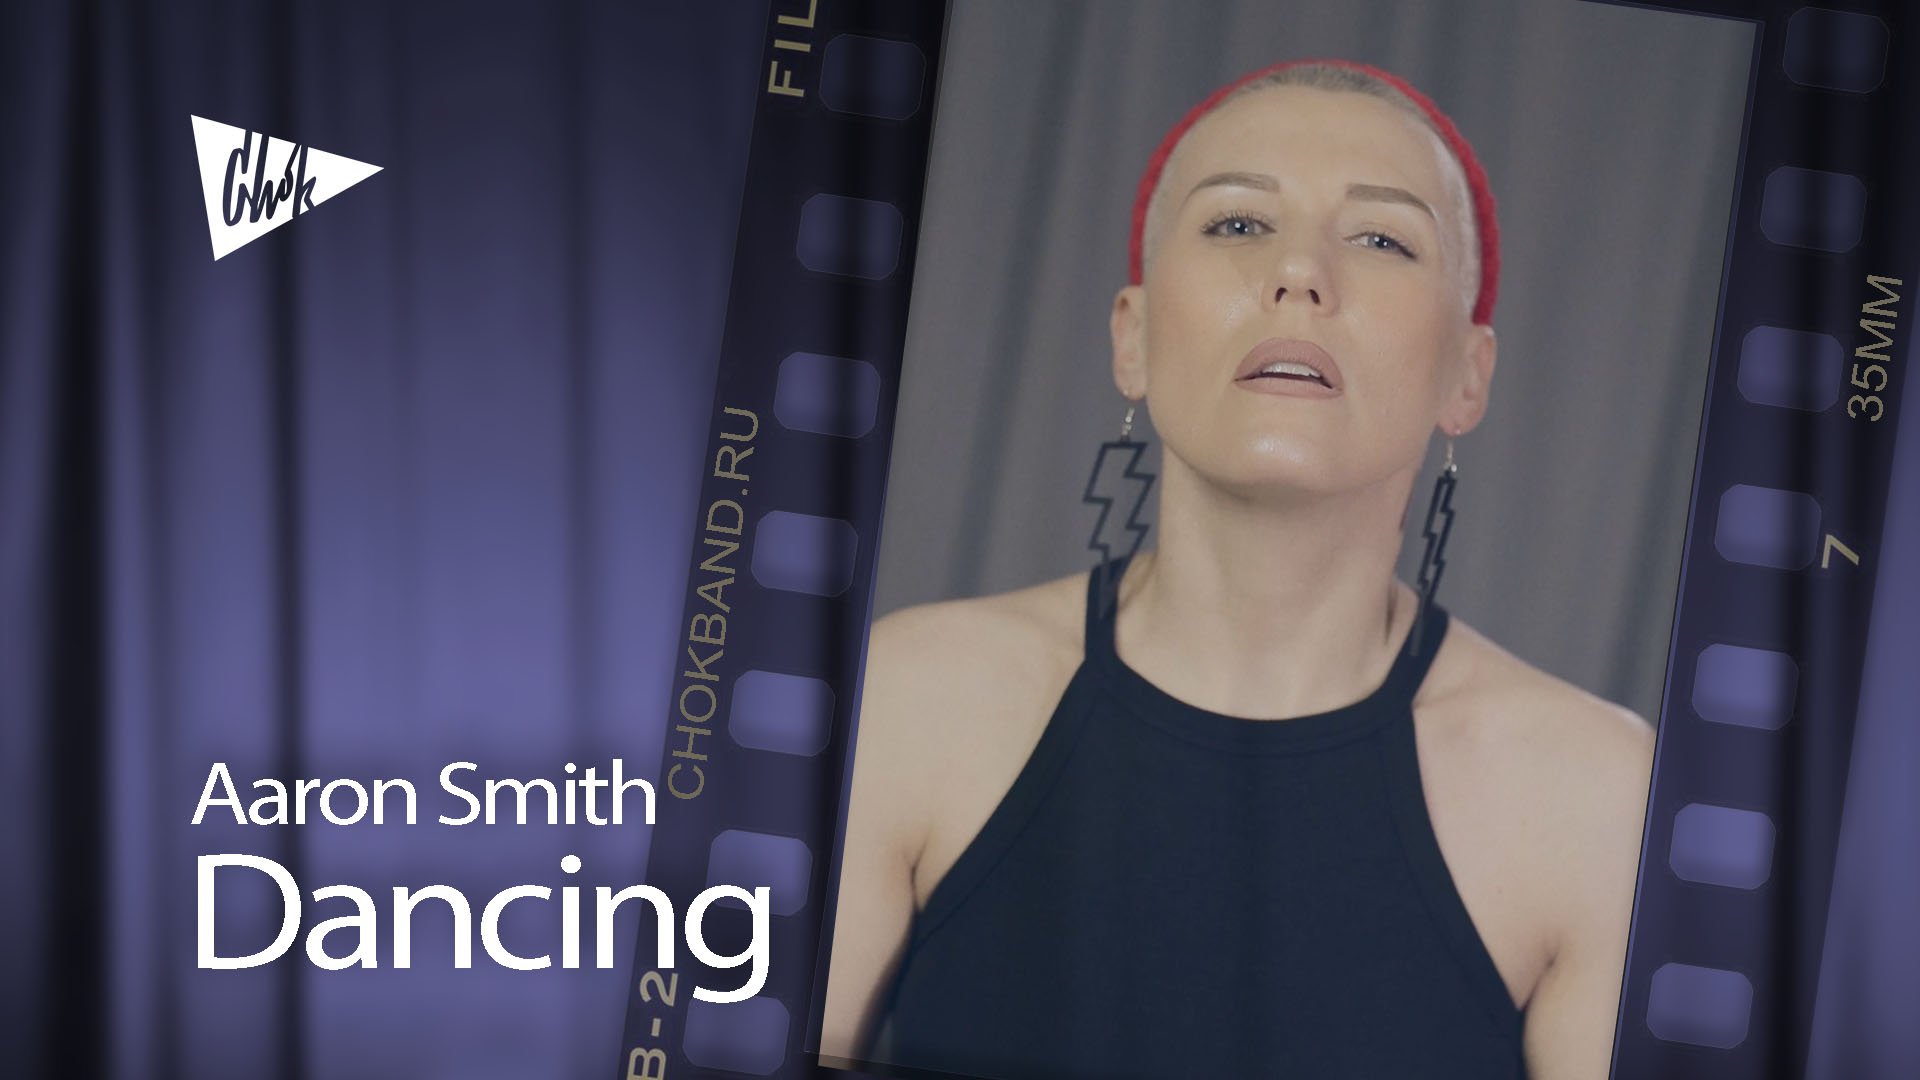 Aaron Smith - Dancing (Chok cover)